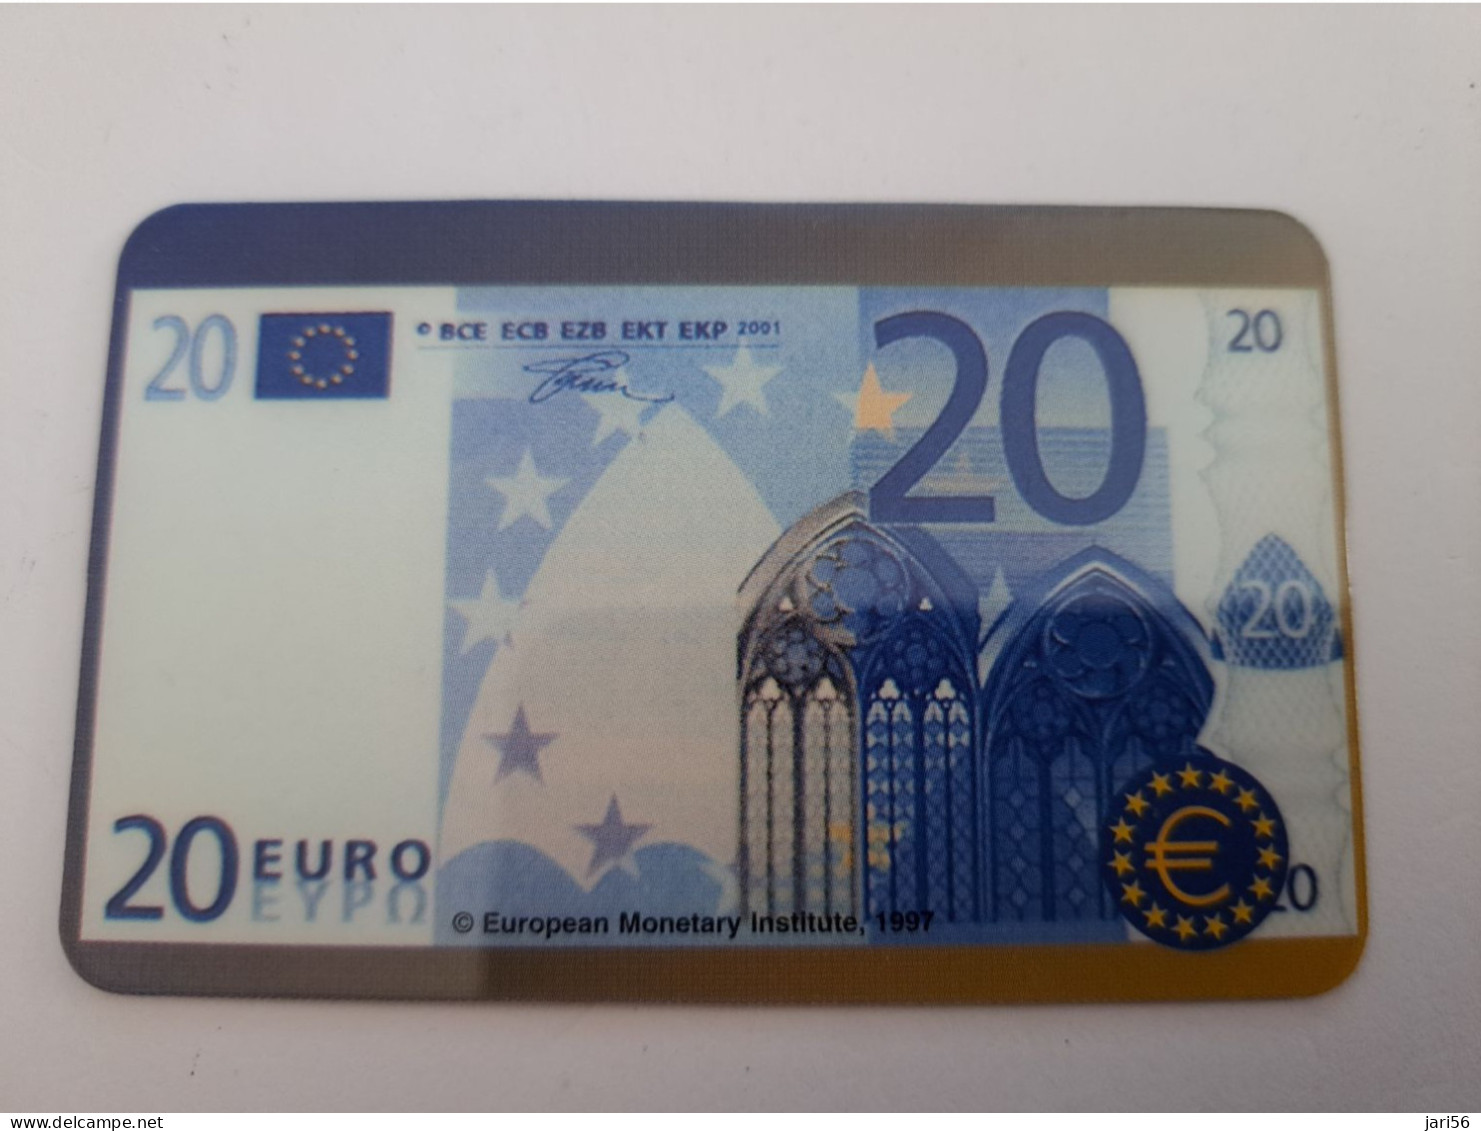 GREAT BRITAIN   20 UNITS   / EURO COINS/ BILJET 20  EURO    (date NOVEMBER 1998)  PREPAID CARD / MINT      **14832** - [10] Sammlungen